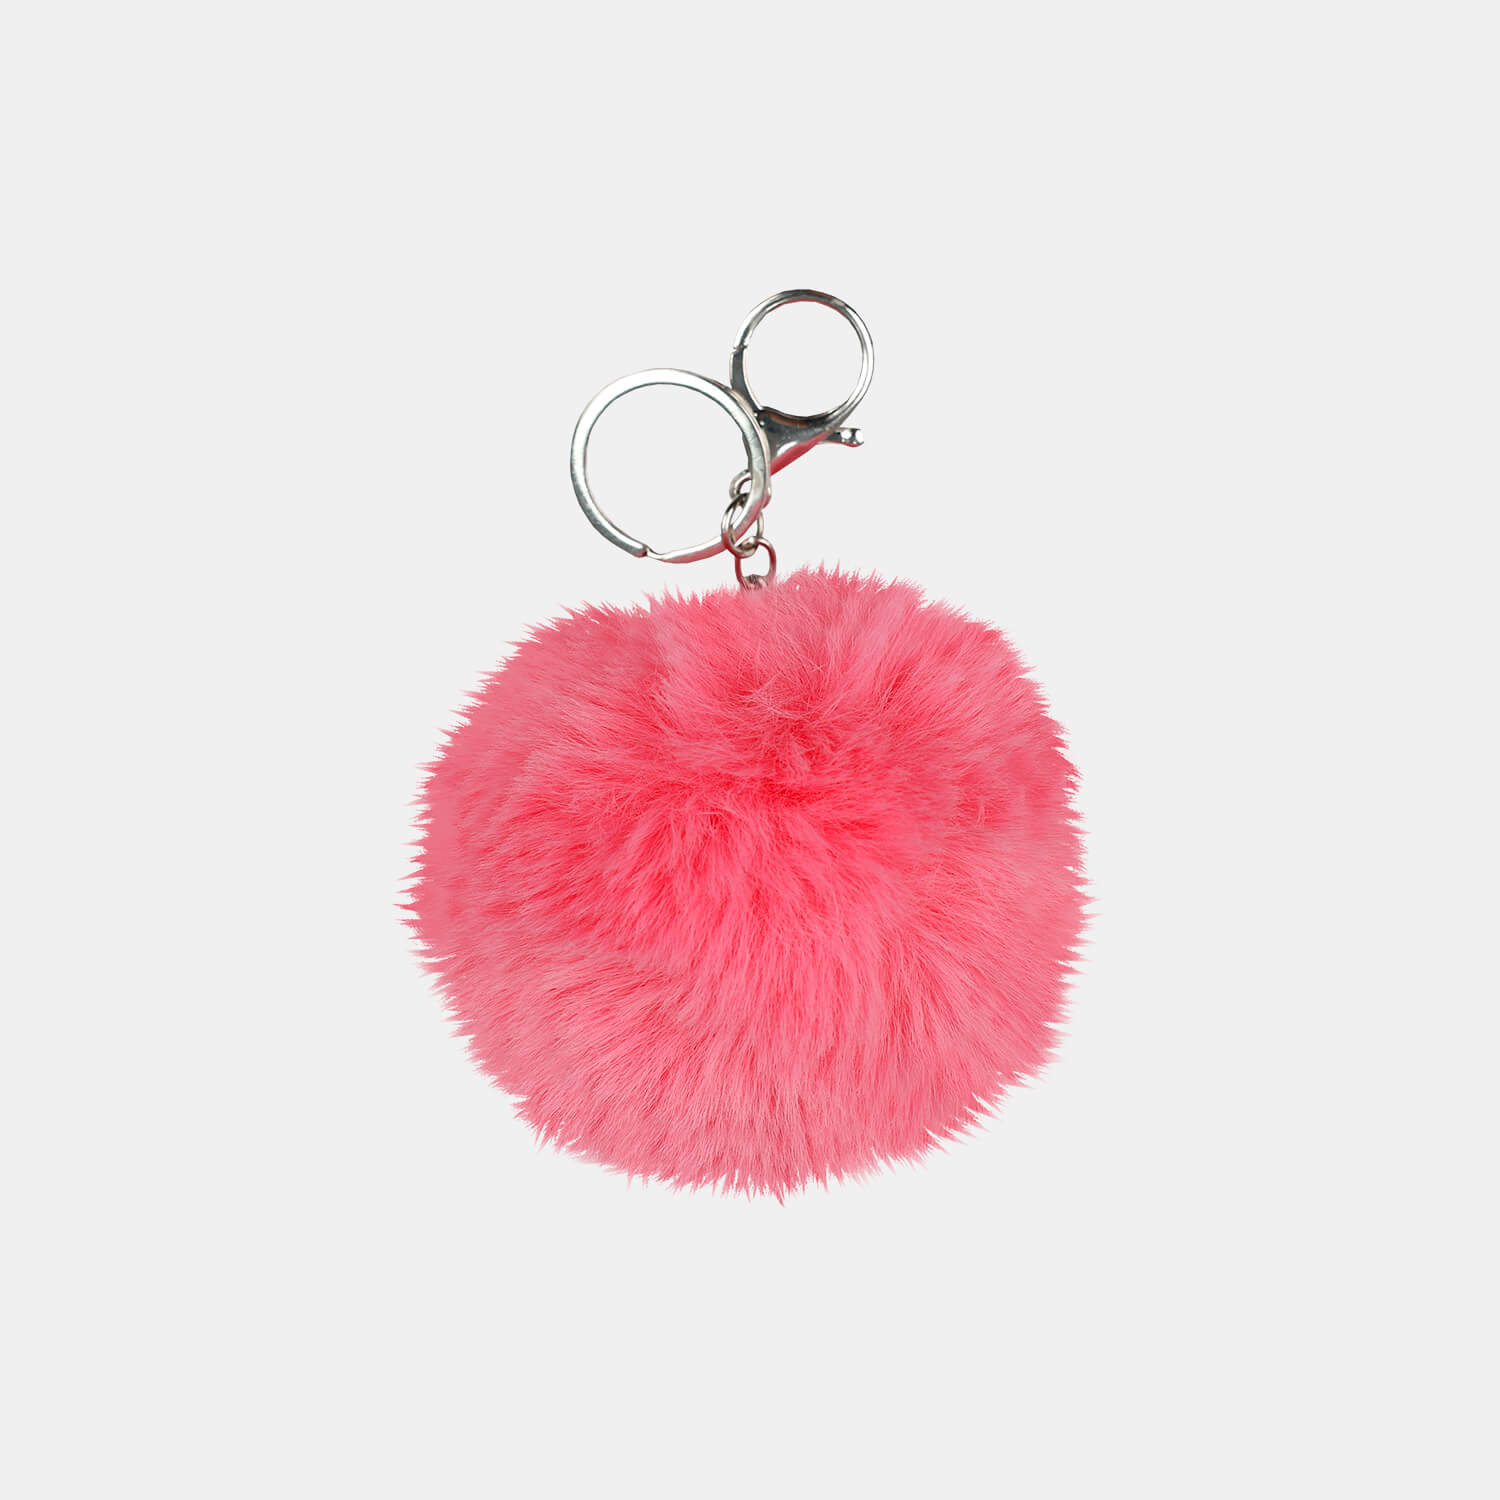 Schlüsse﻿lhalter Pink Ball